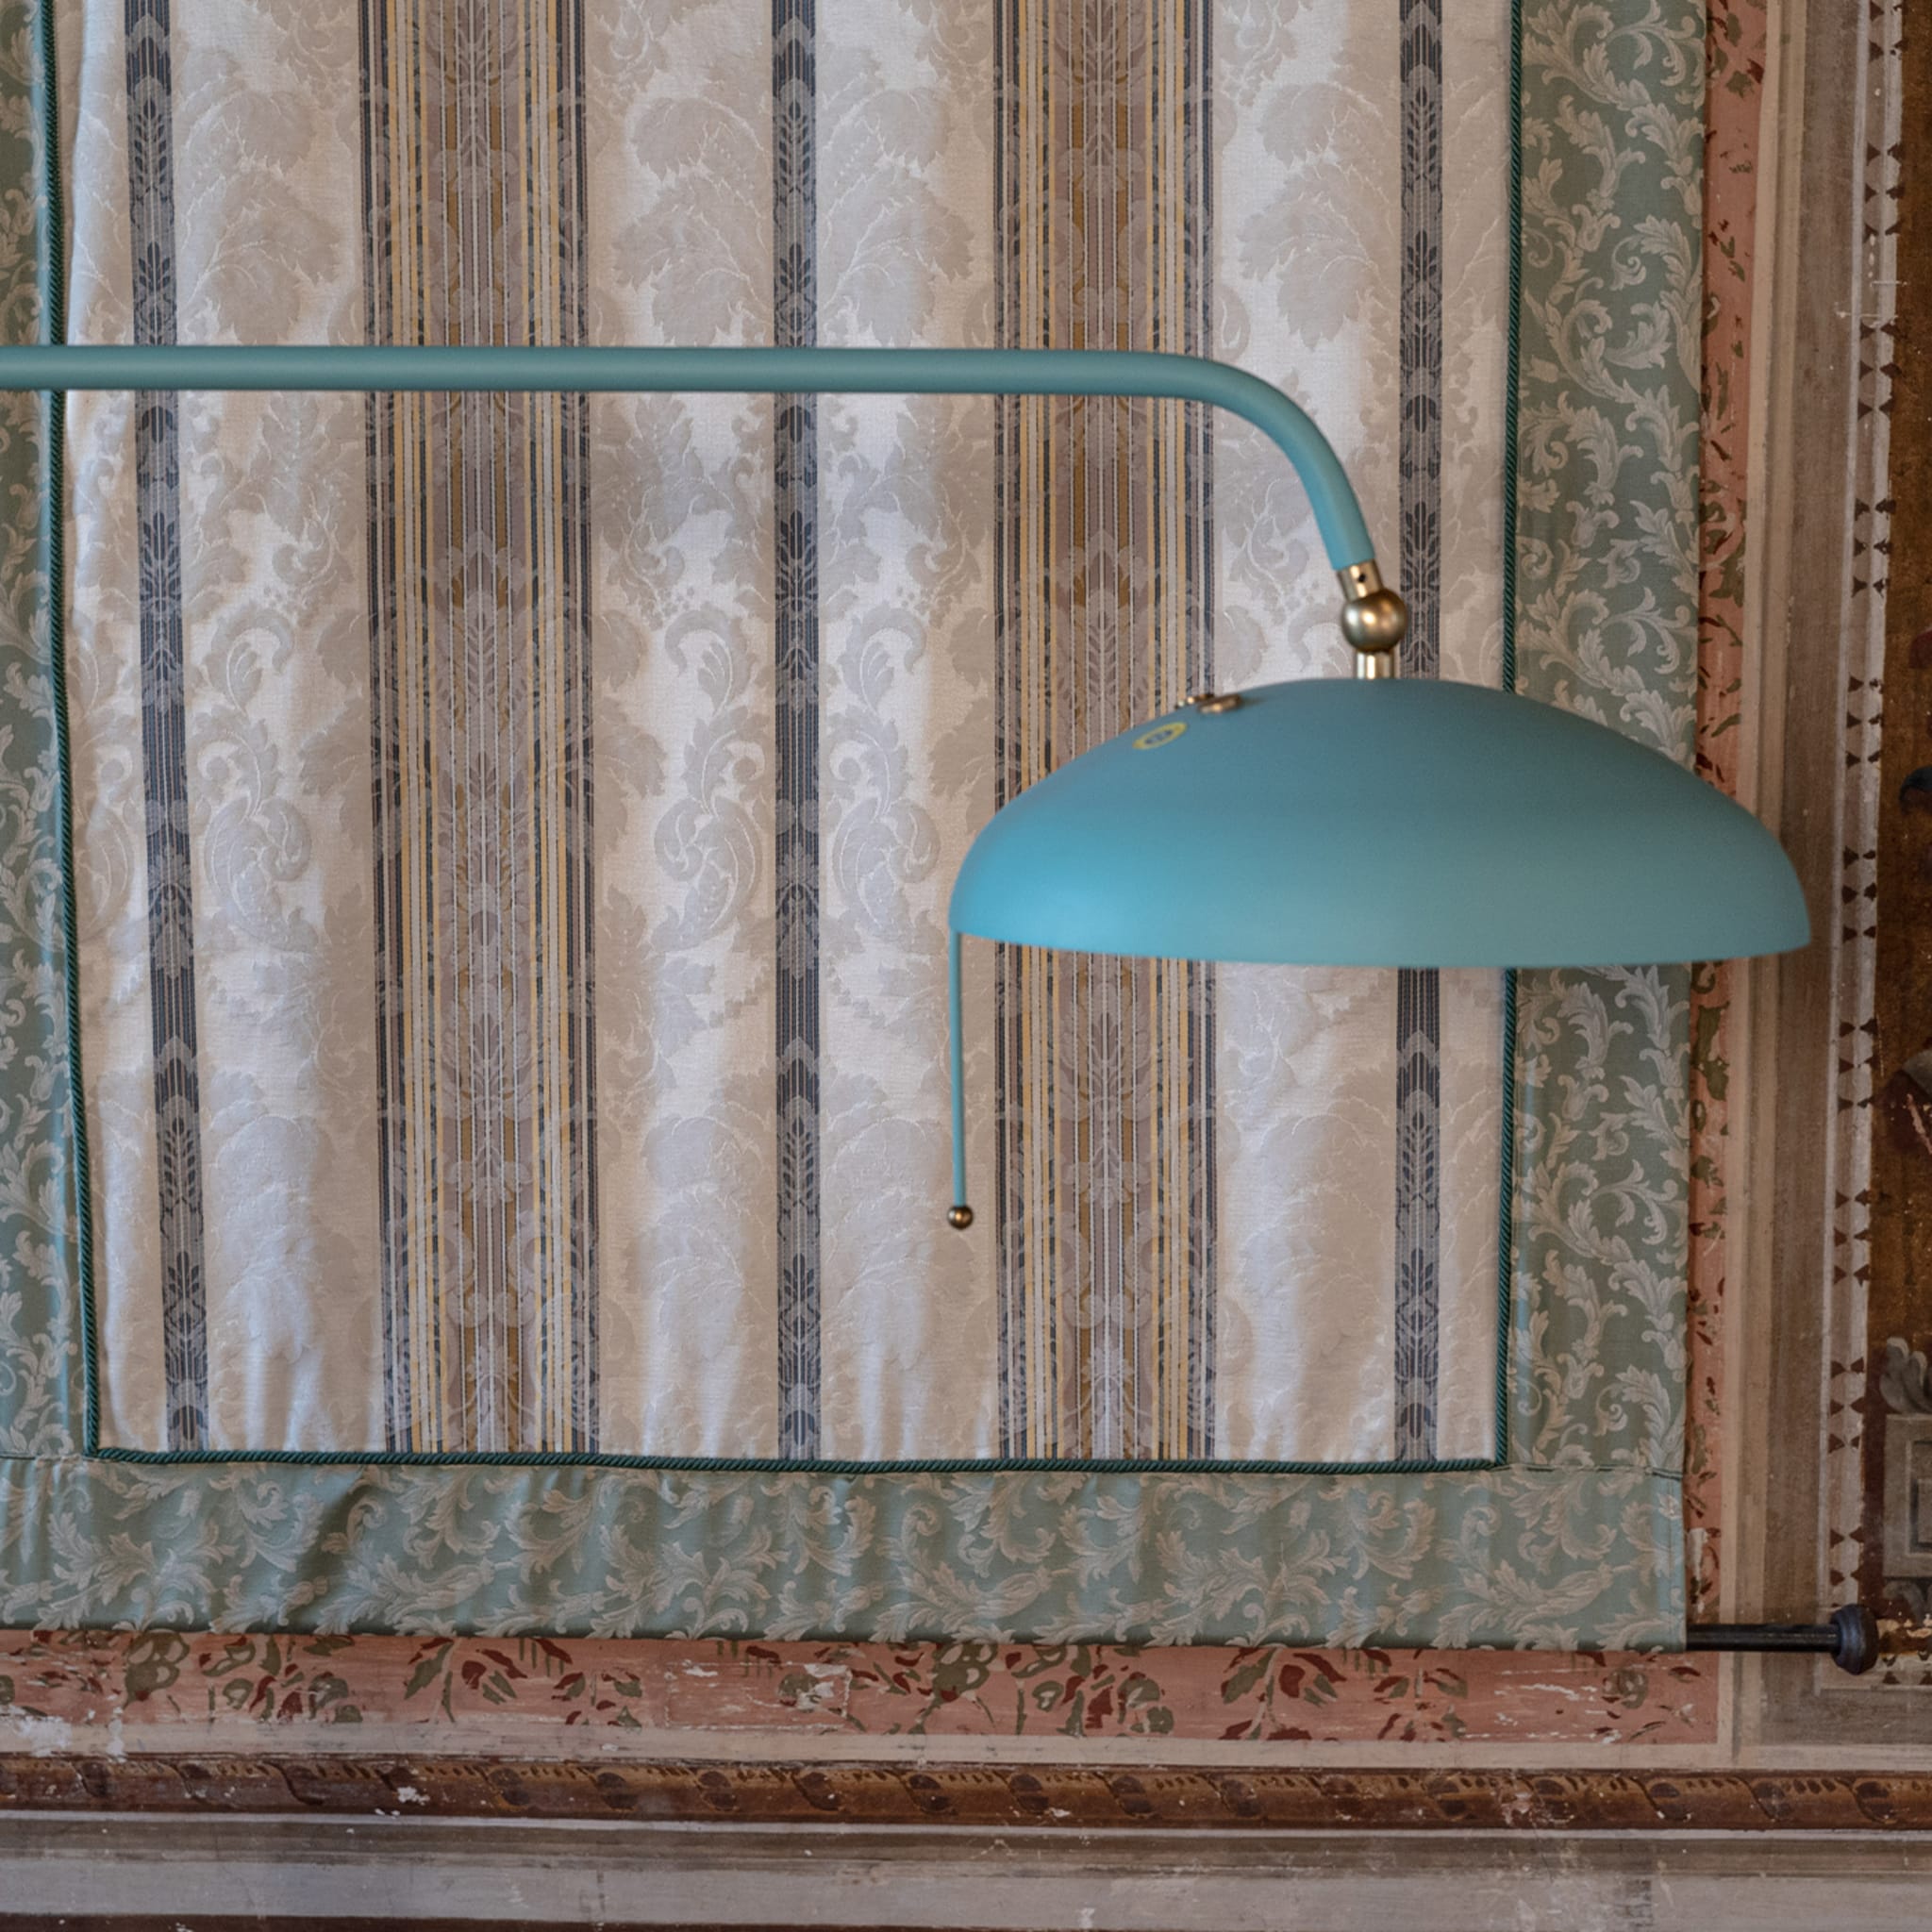 Serena Convivio Light Blue Floor Lamp - Alternative view 1